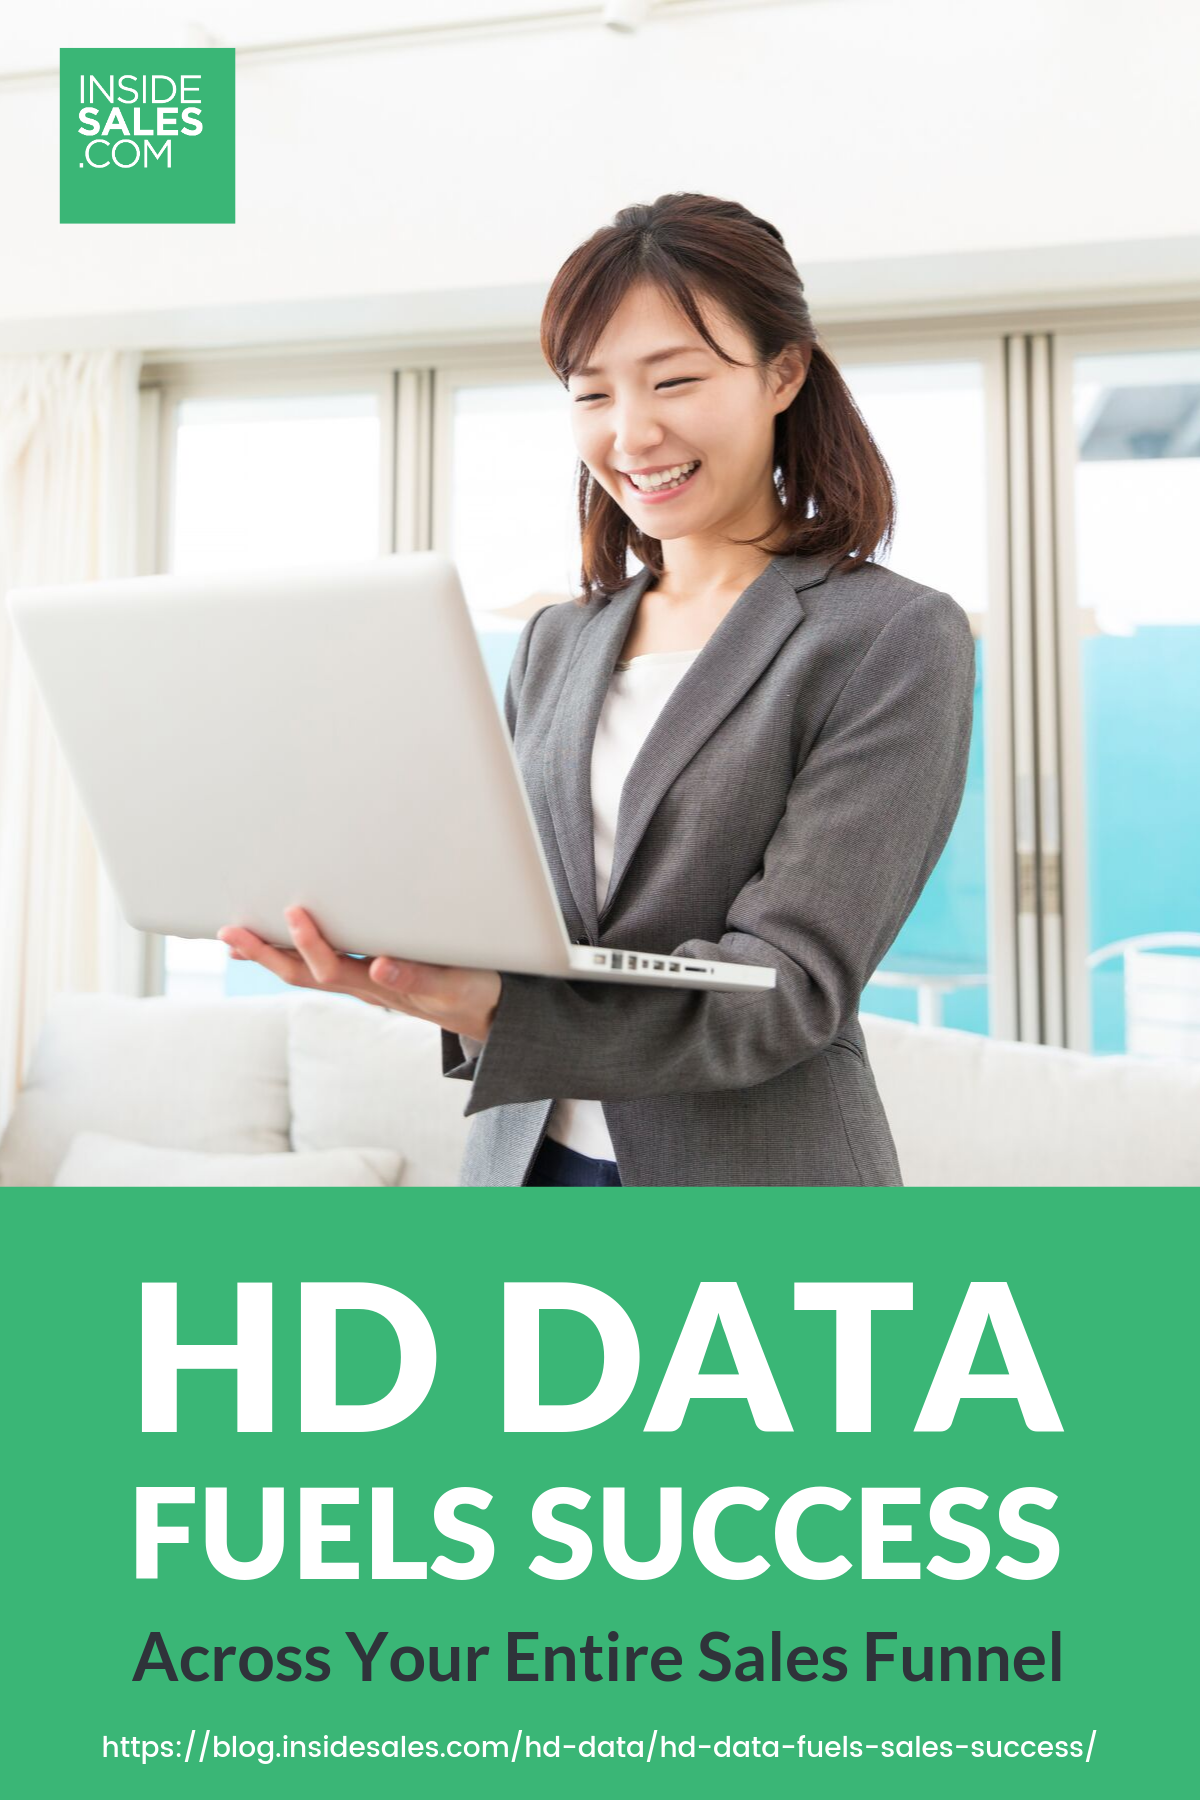 HD Data Fuels Success Across Your Entire Sales Funnel https://resources.insidesales.com/blog/hd-data/hd-data-fuels-sales-success/